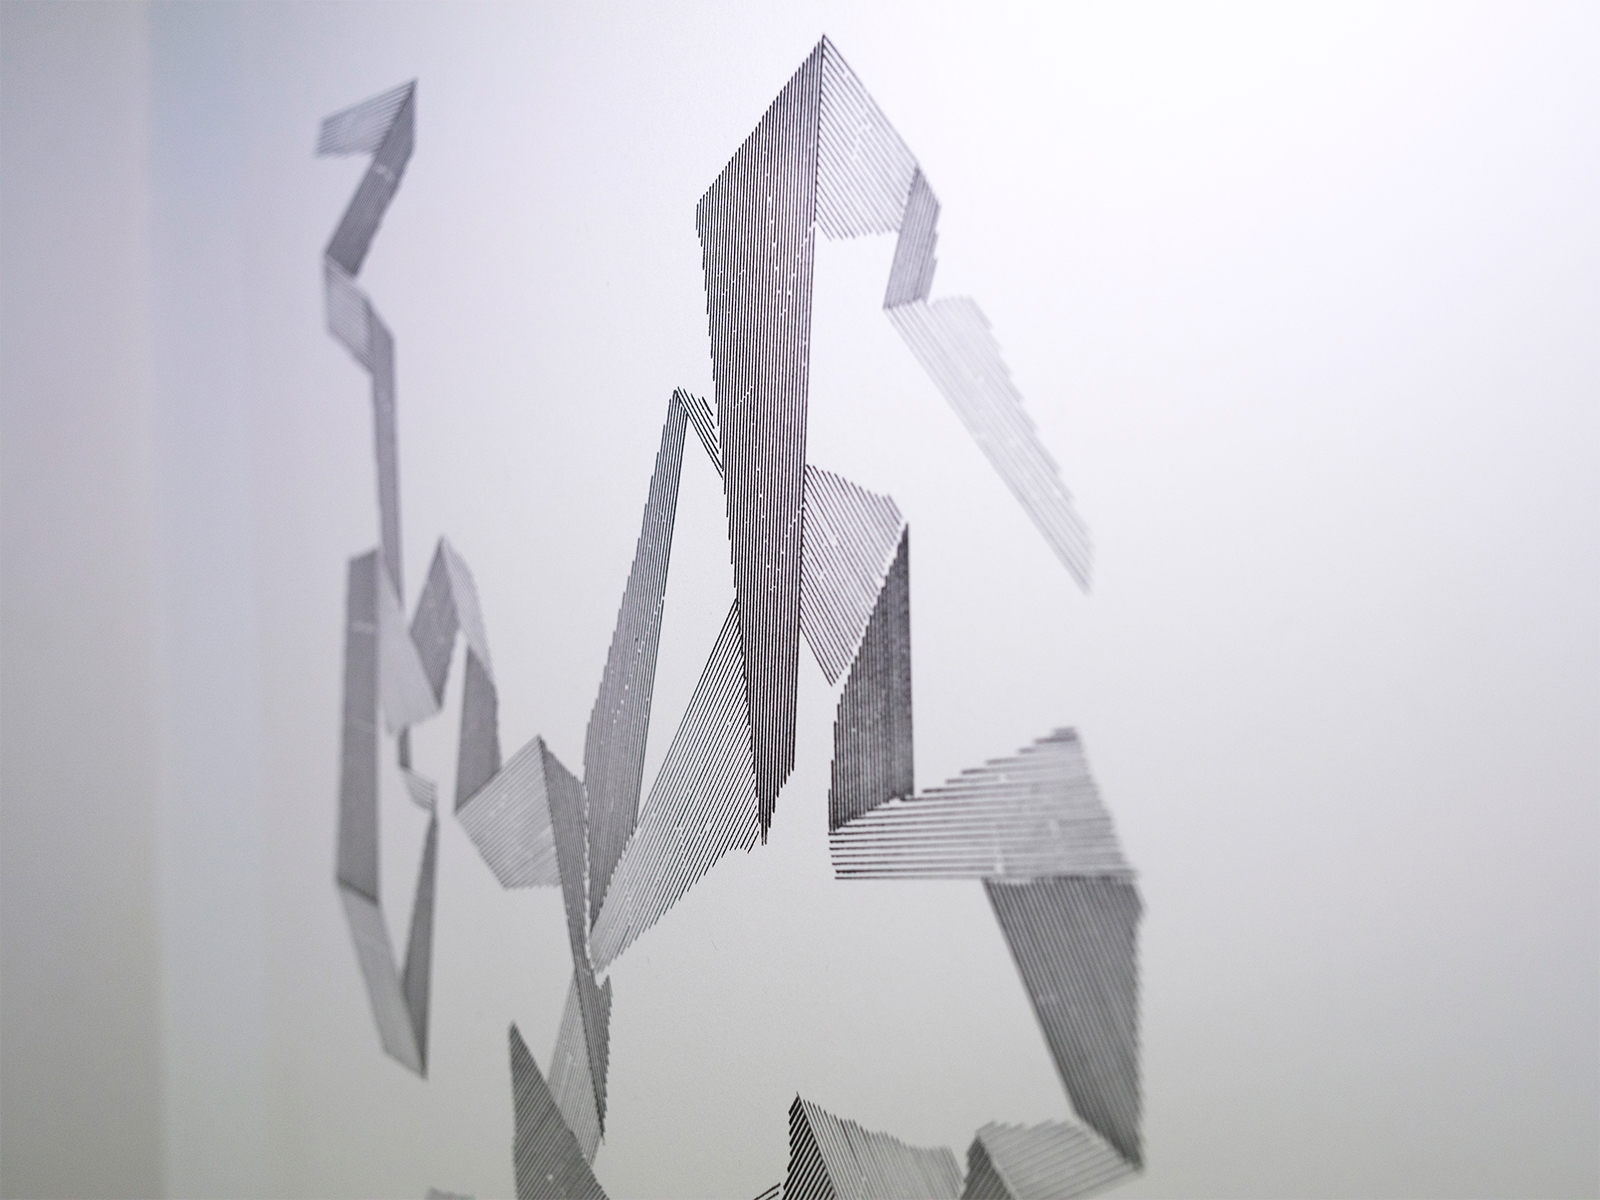 Incunabula:
David Maurissen/vlek at print gallery Tokyo